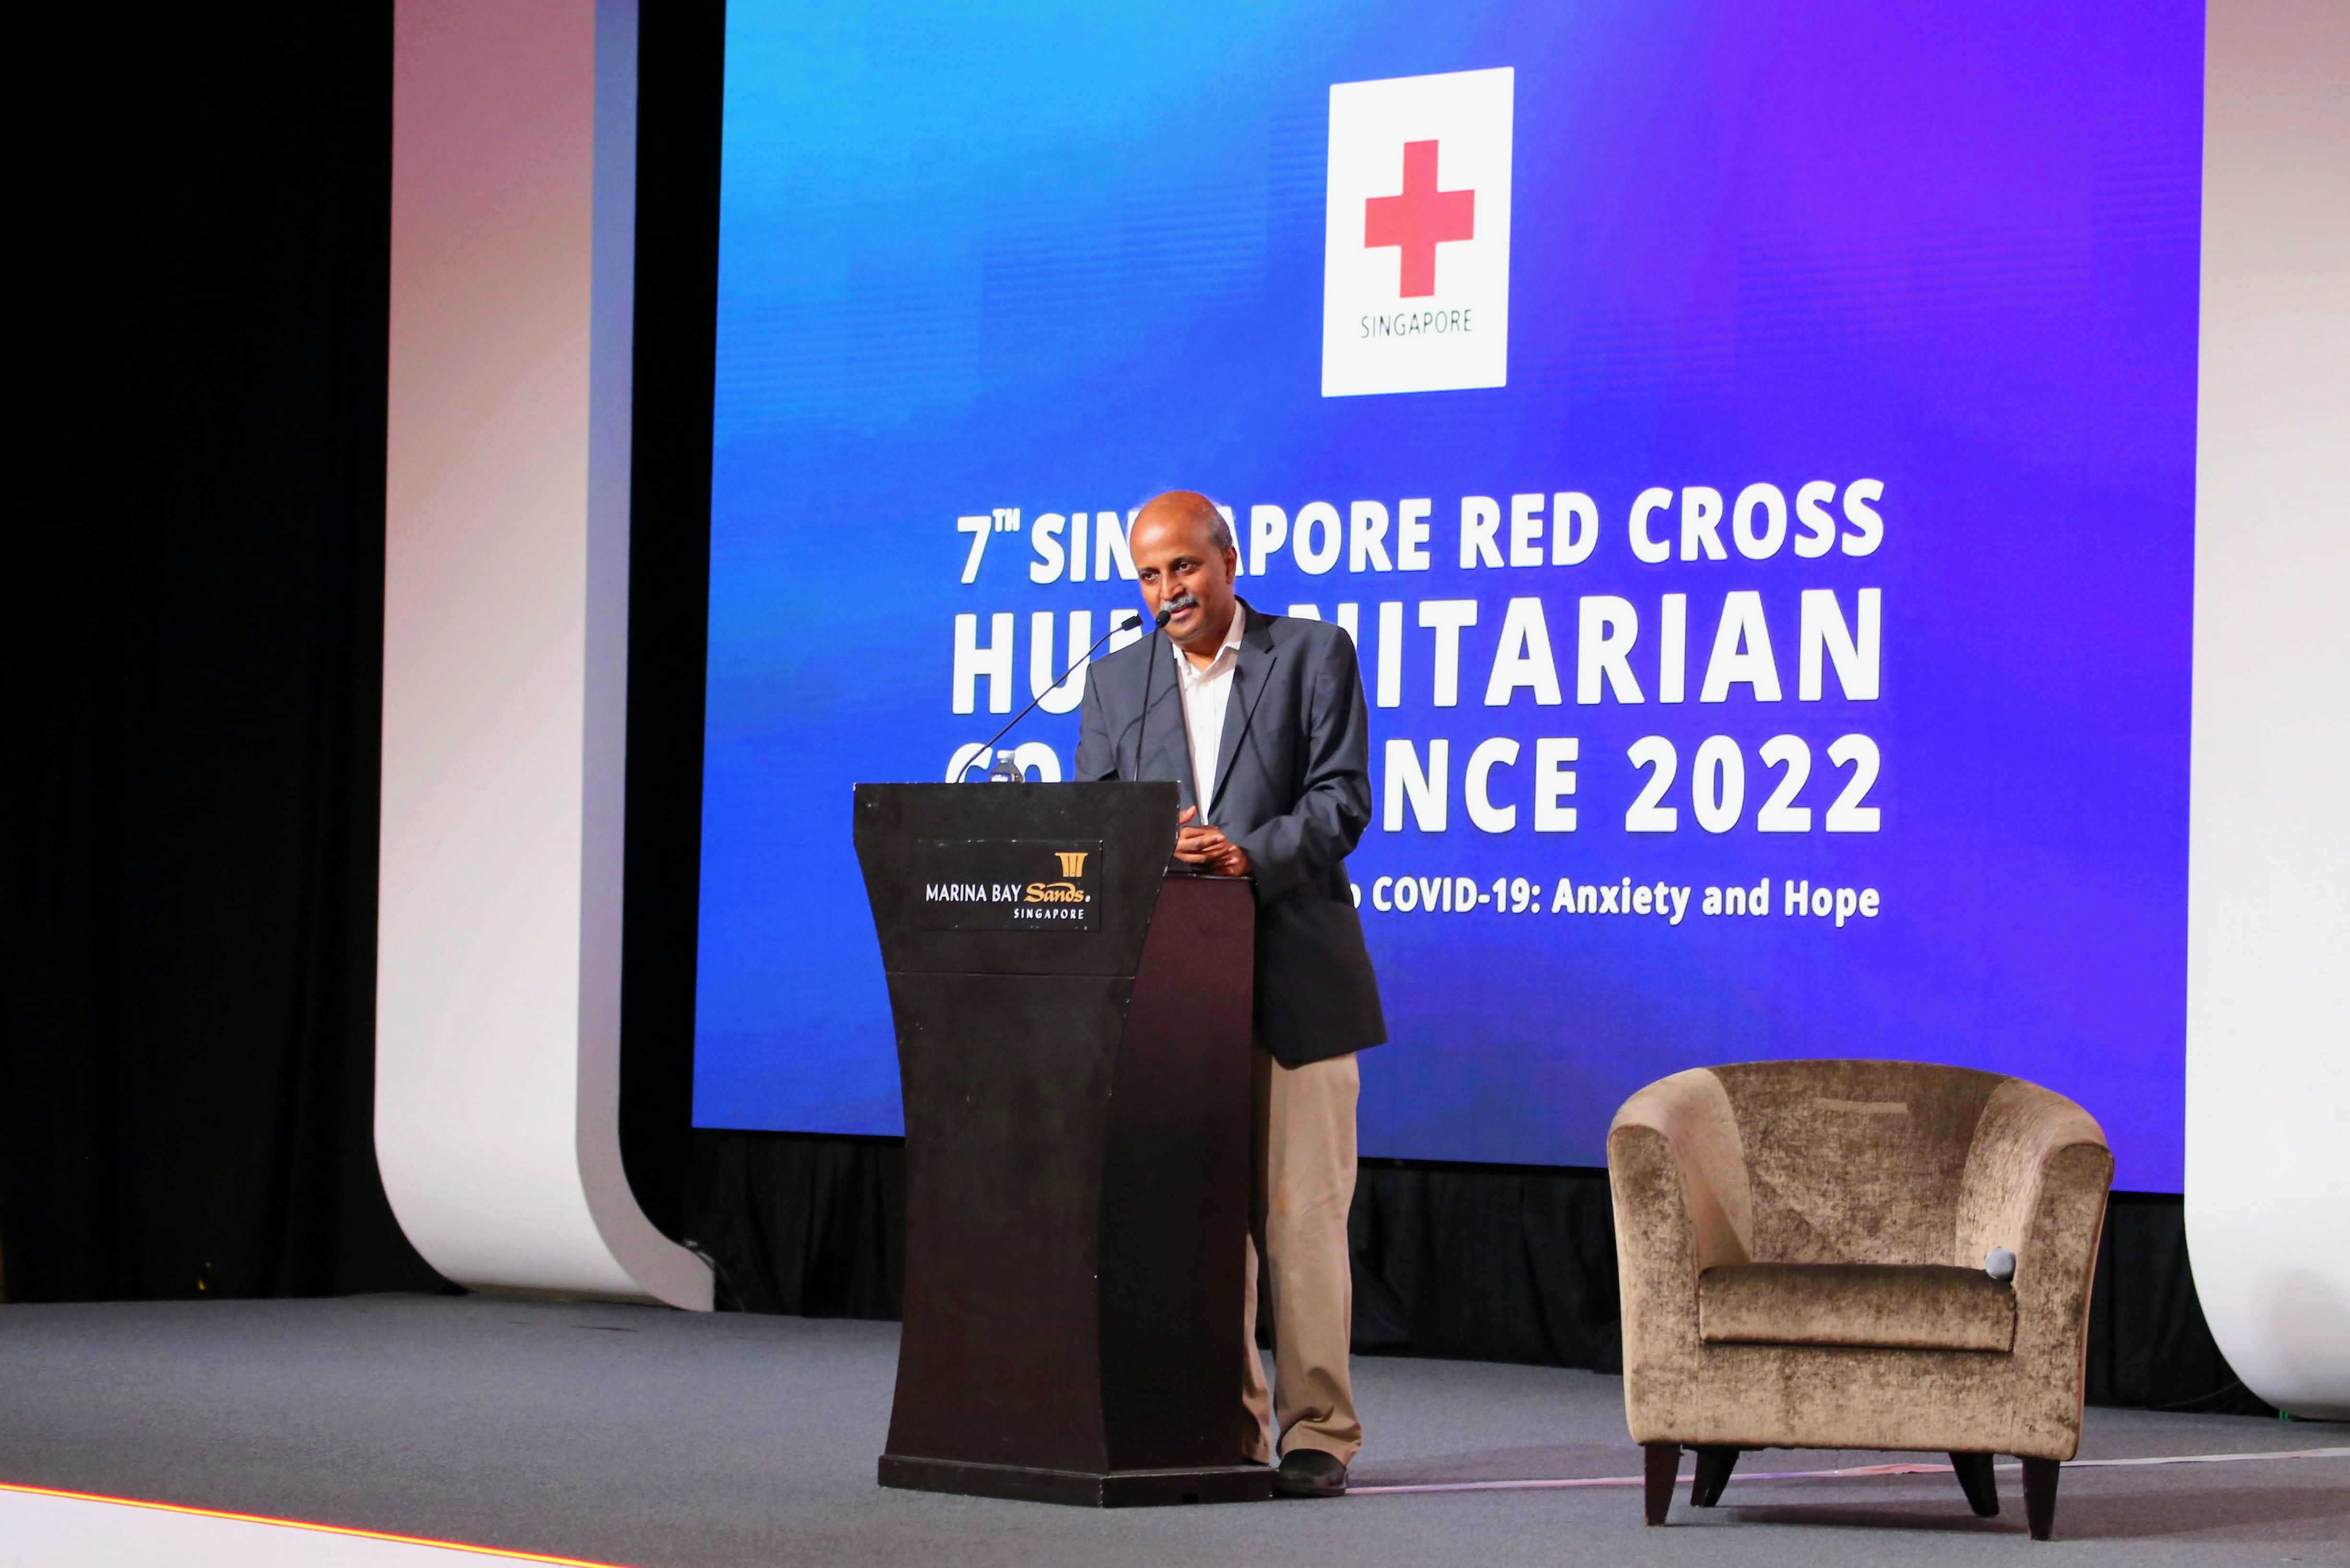 Dr Paul Tambyah Singapore Red Cross 7th Humanitarian Conference